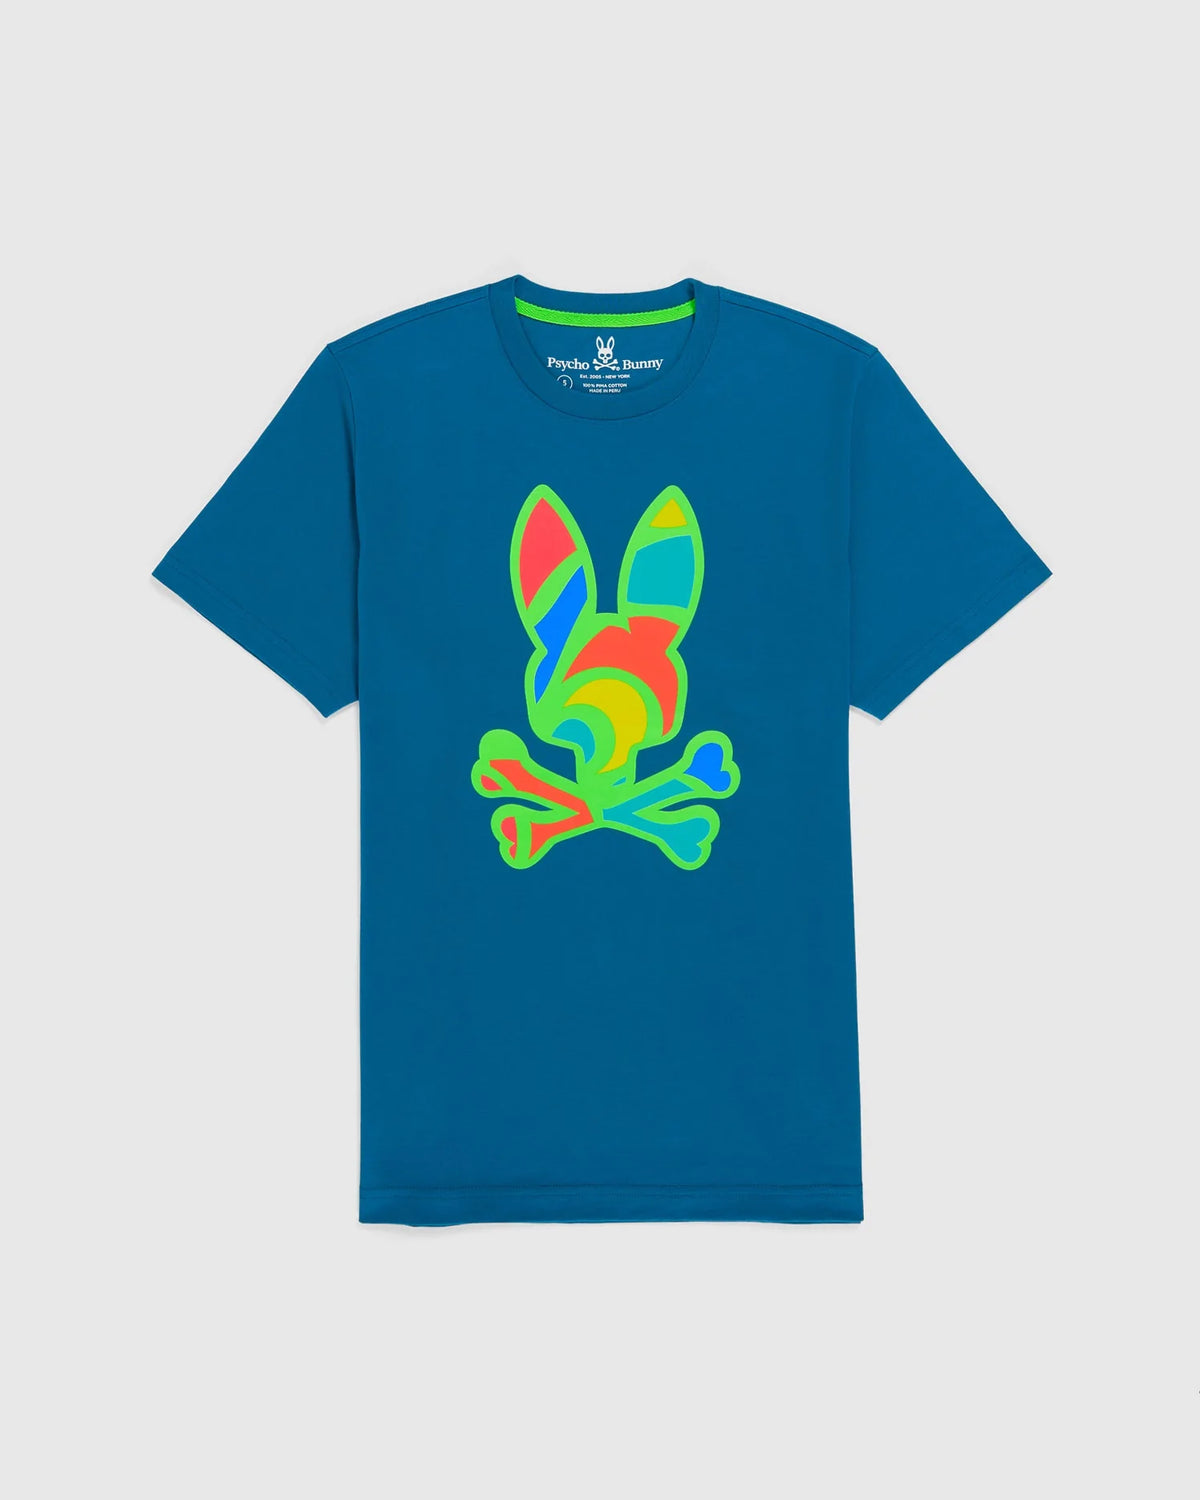 Psycho Bunny (B6U112W1PC) - Hilsboro Multi Color Bunny Tee - Aegean Sea